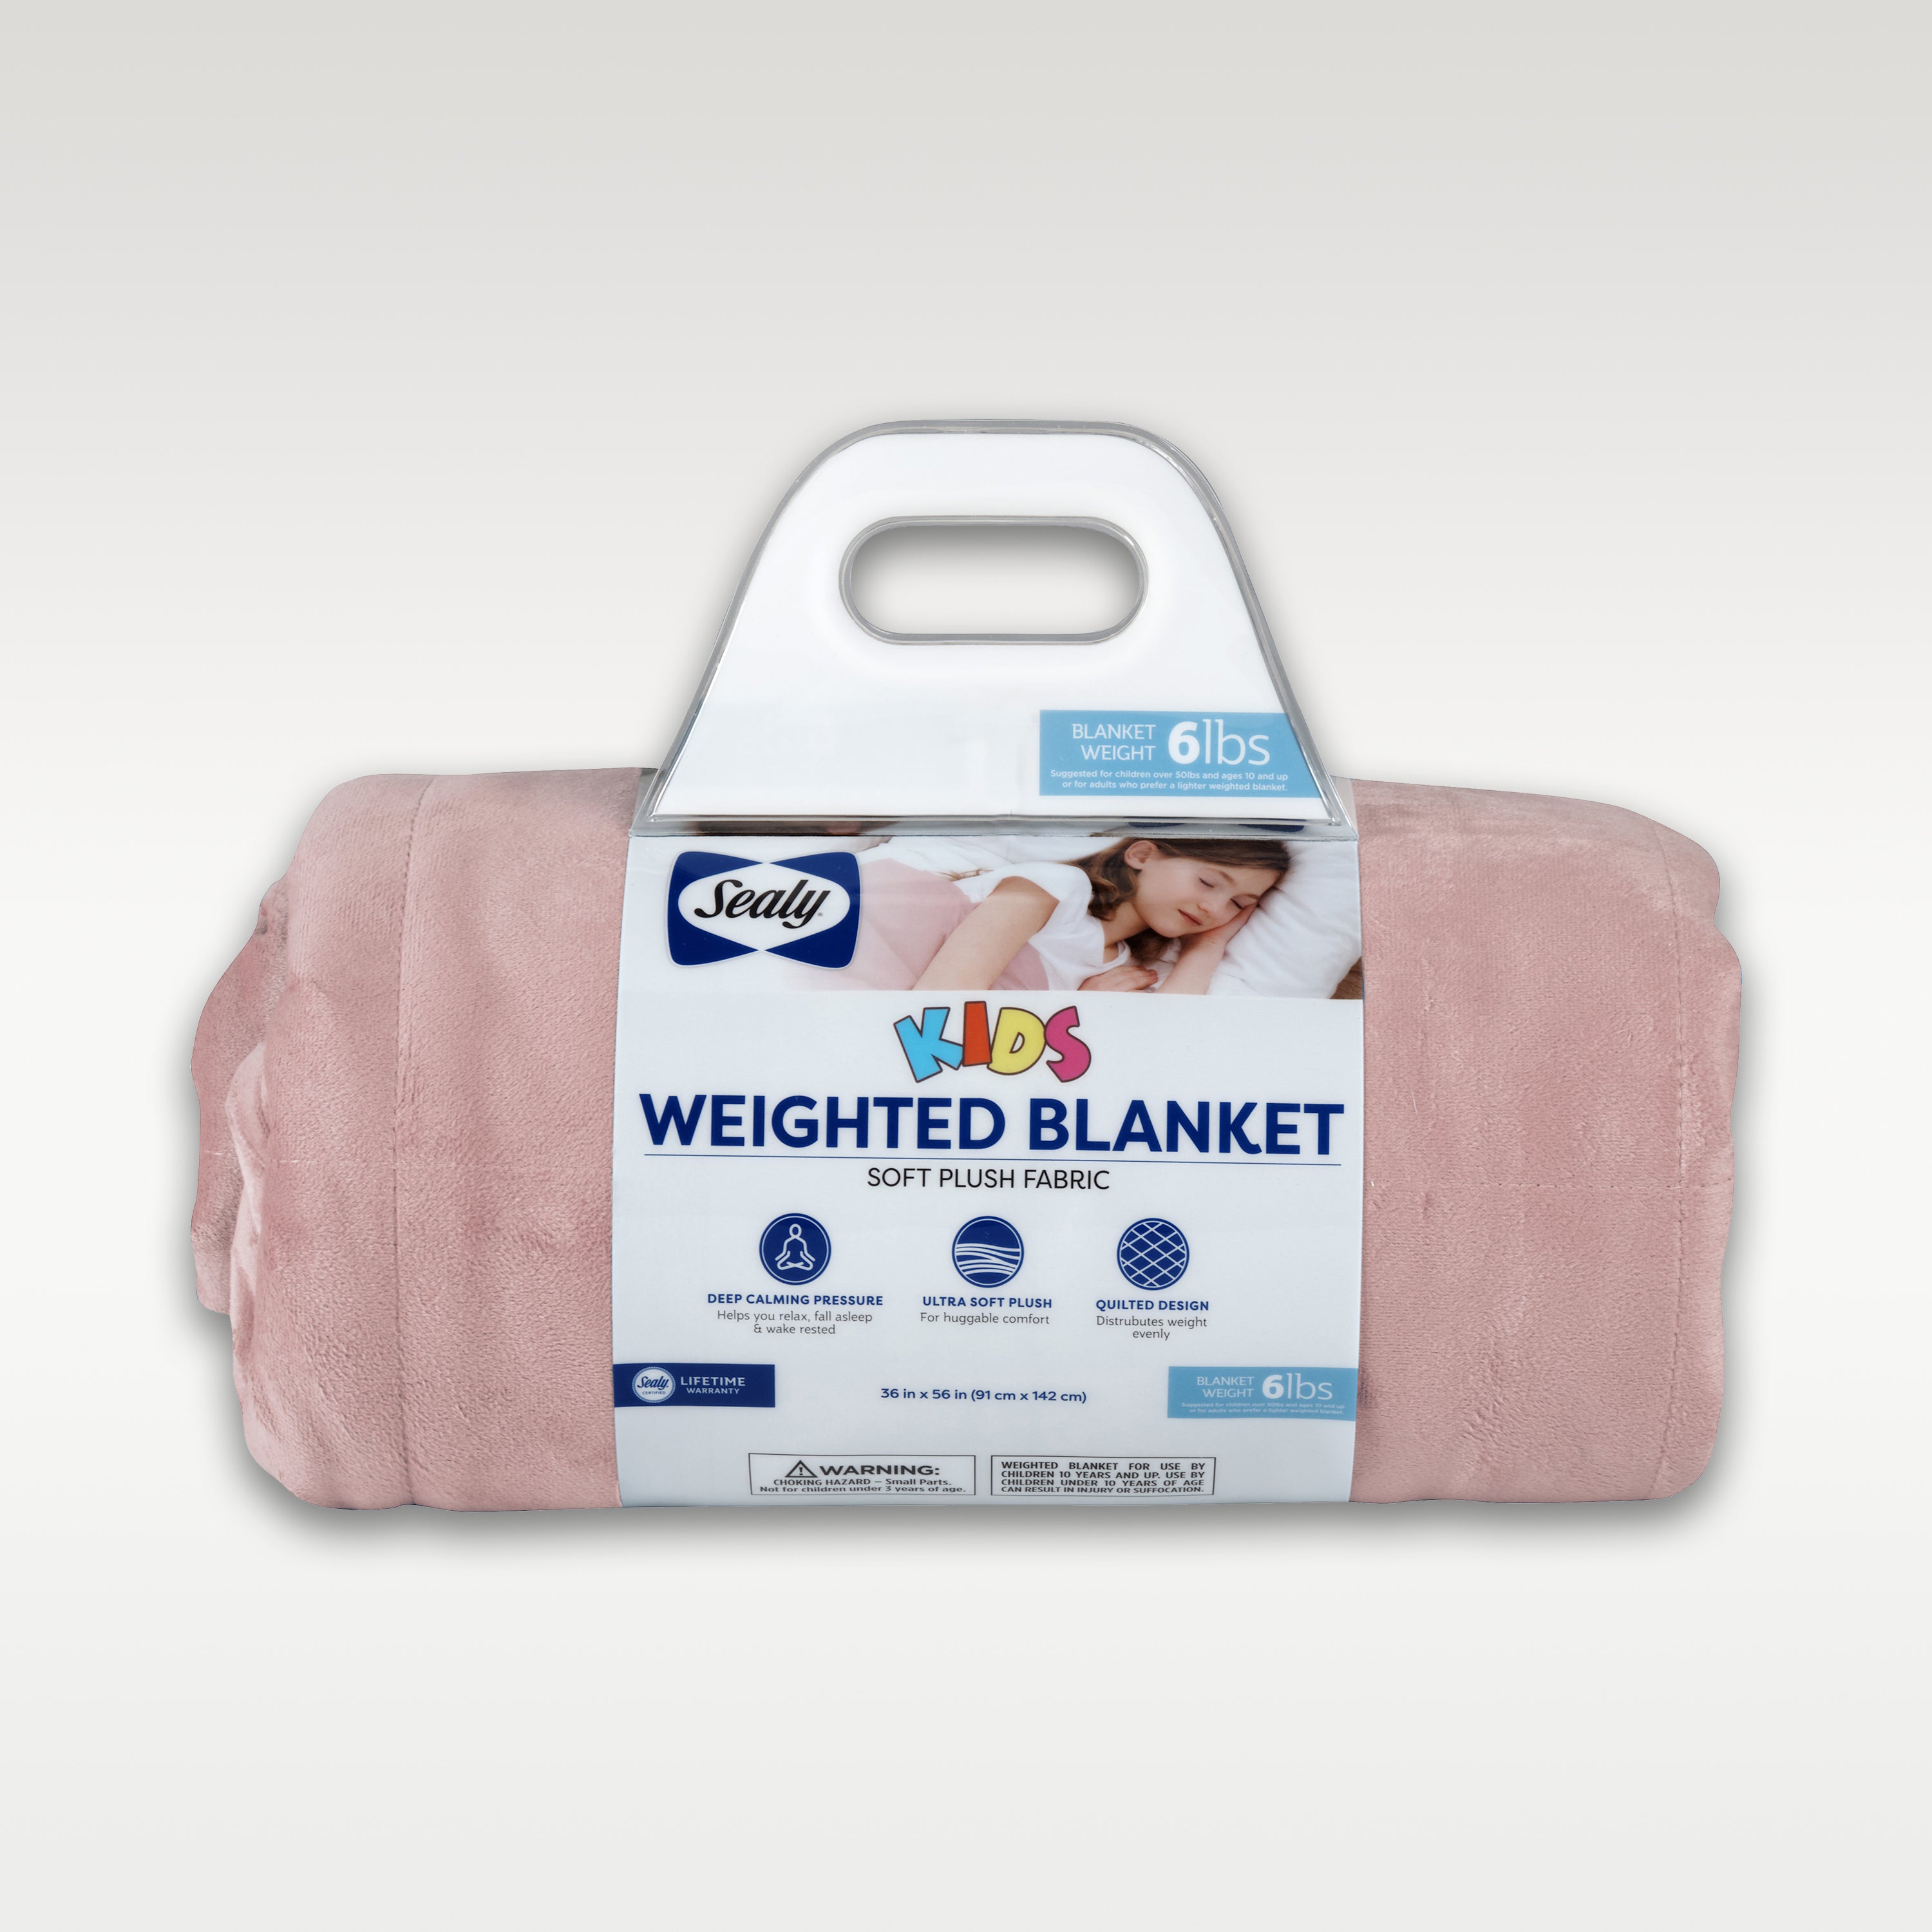 Kids Sharper Image Calming Comfort Weighted Blanket, 6 lbs